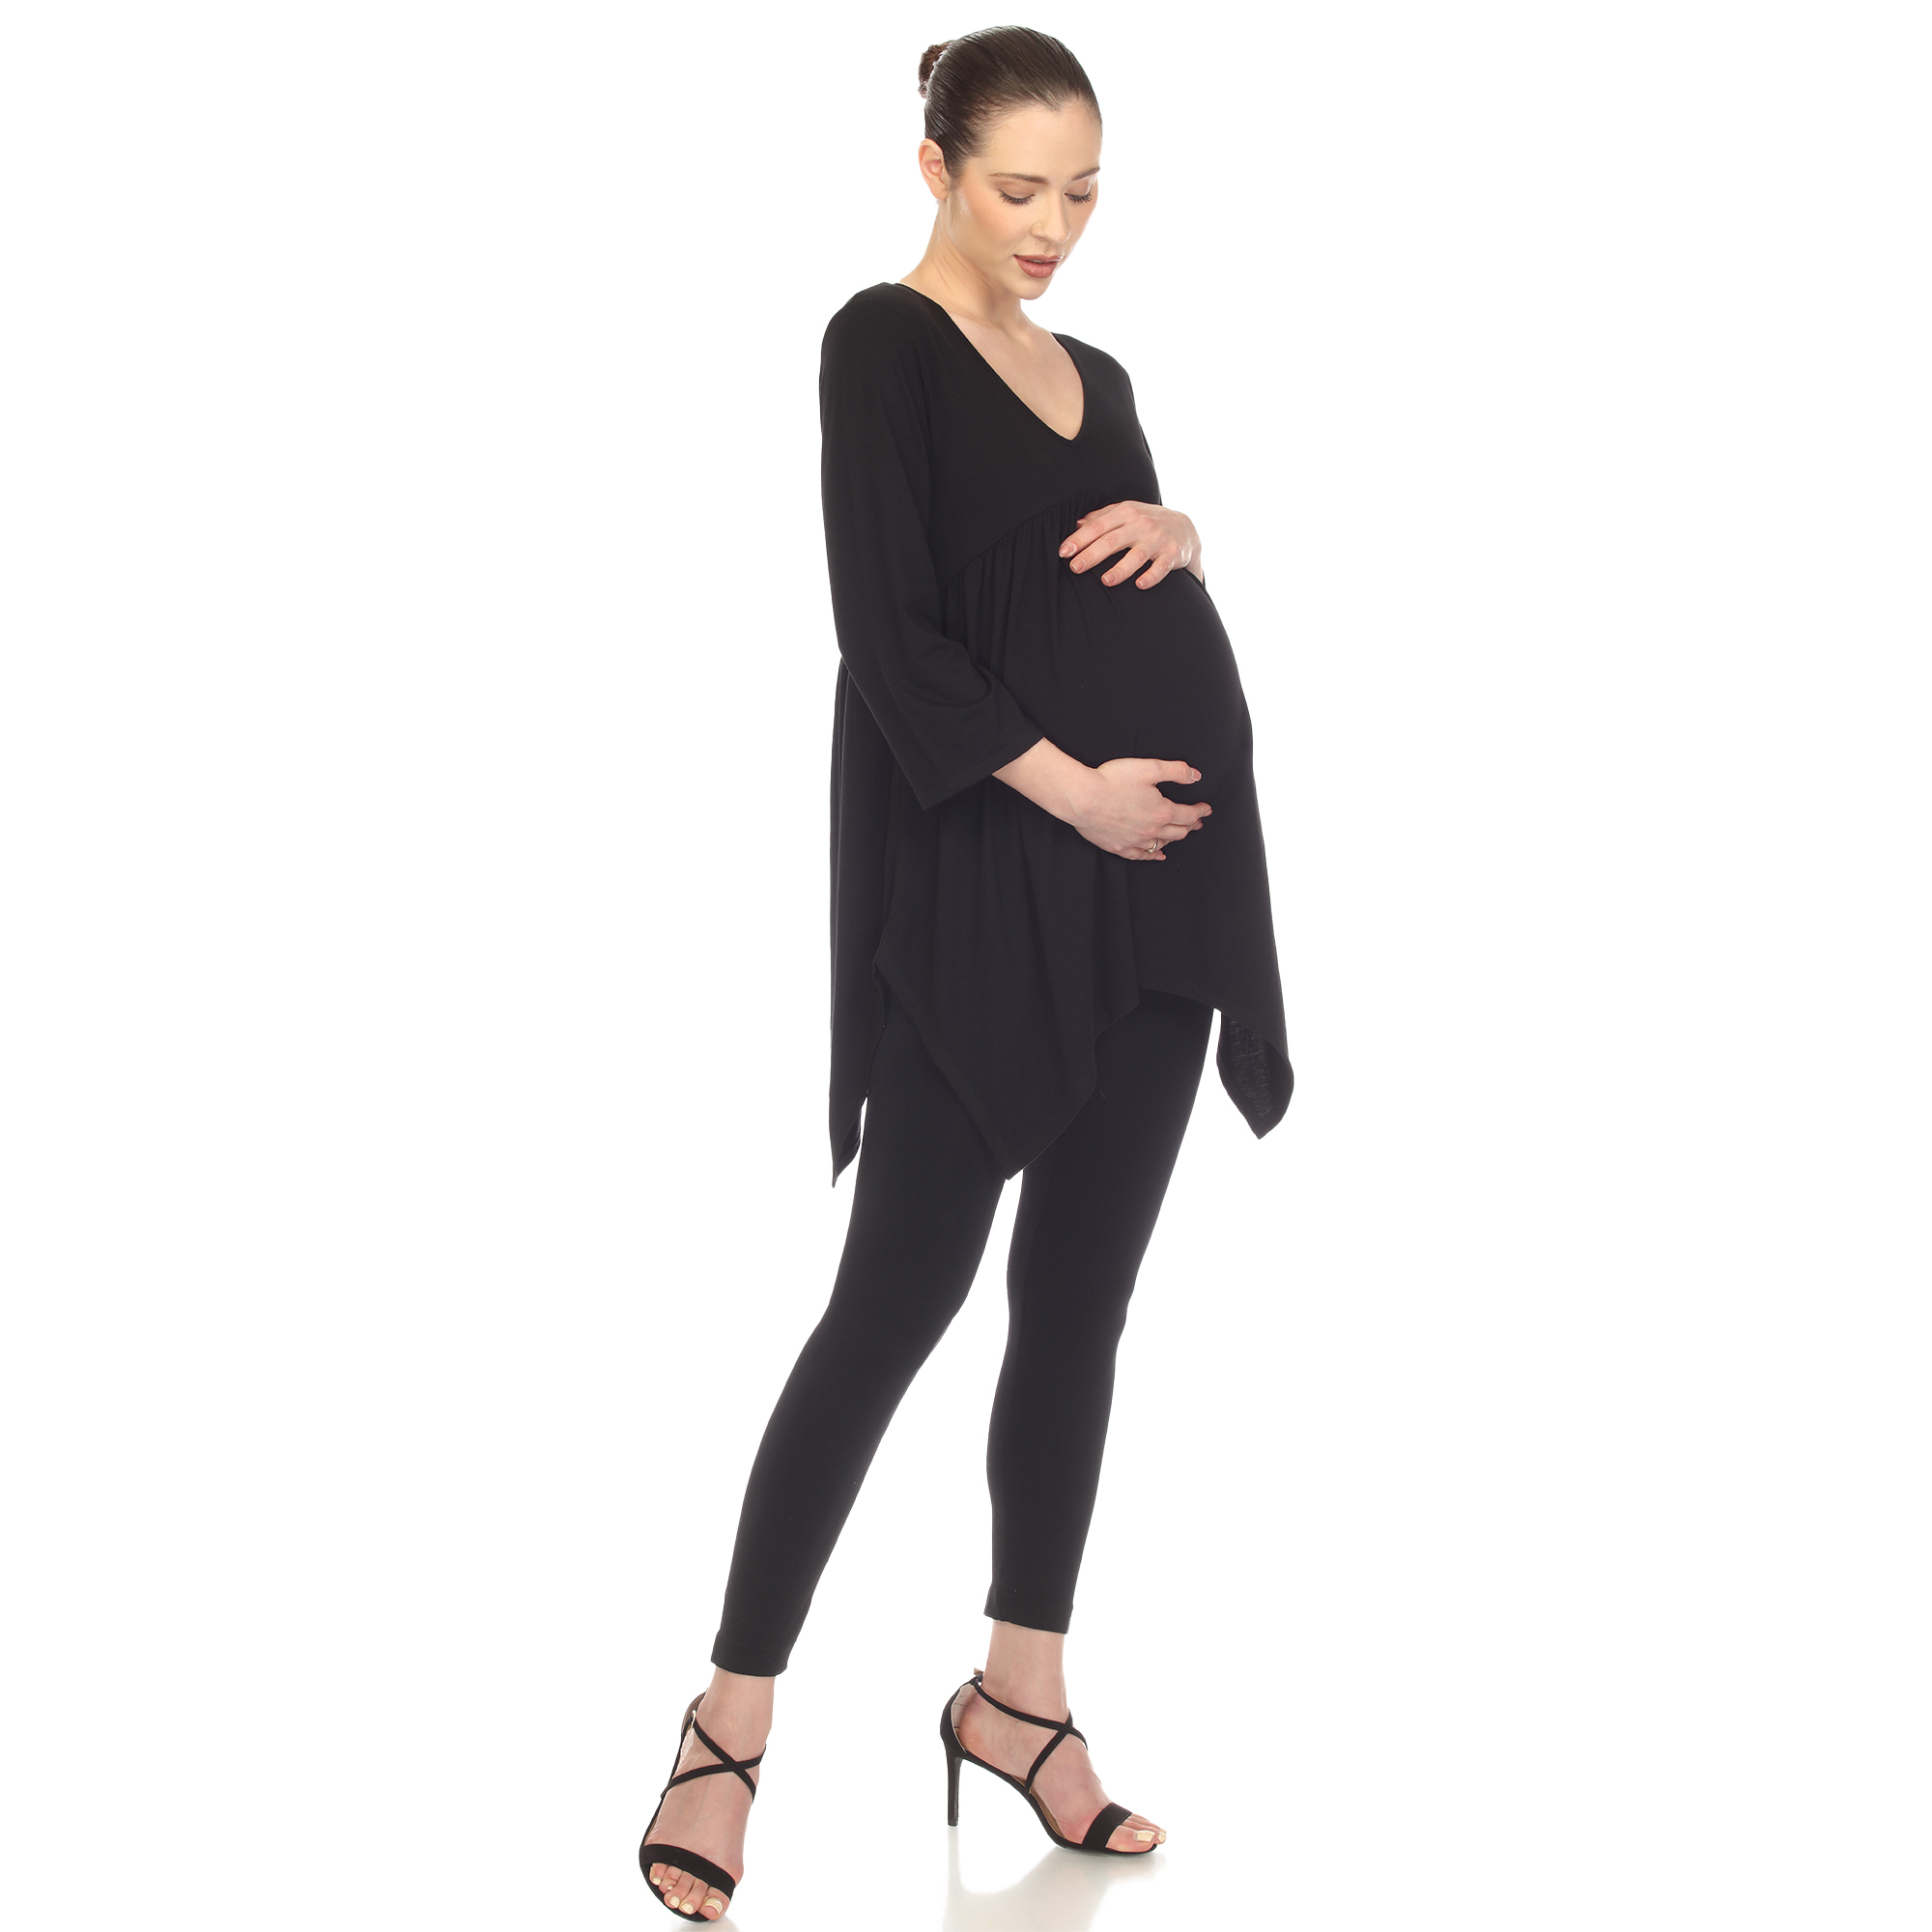 White Mark Women's Maternity Empire Waist V-Neck Tunic Top - Black, Small